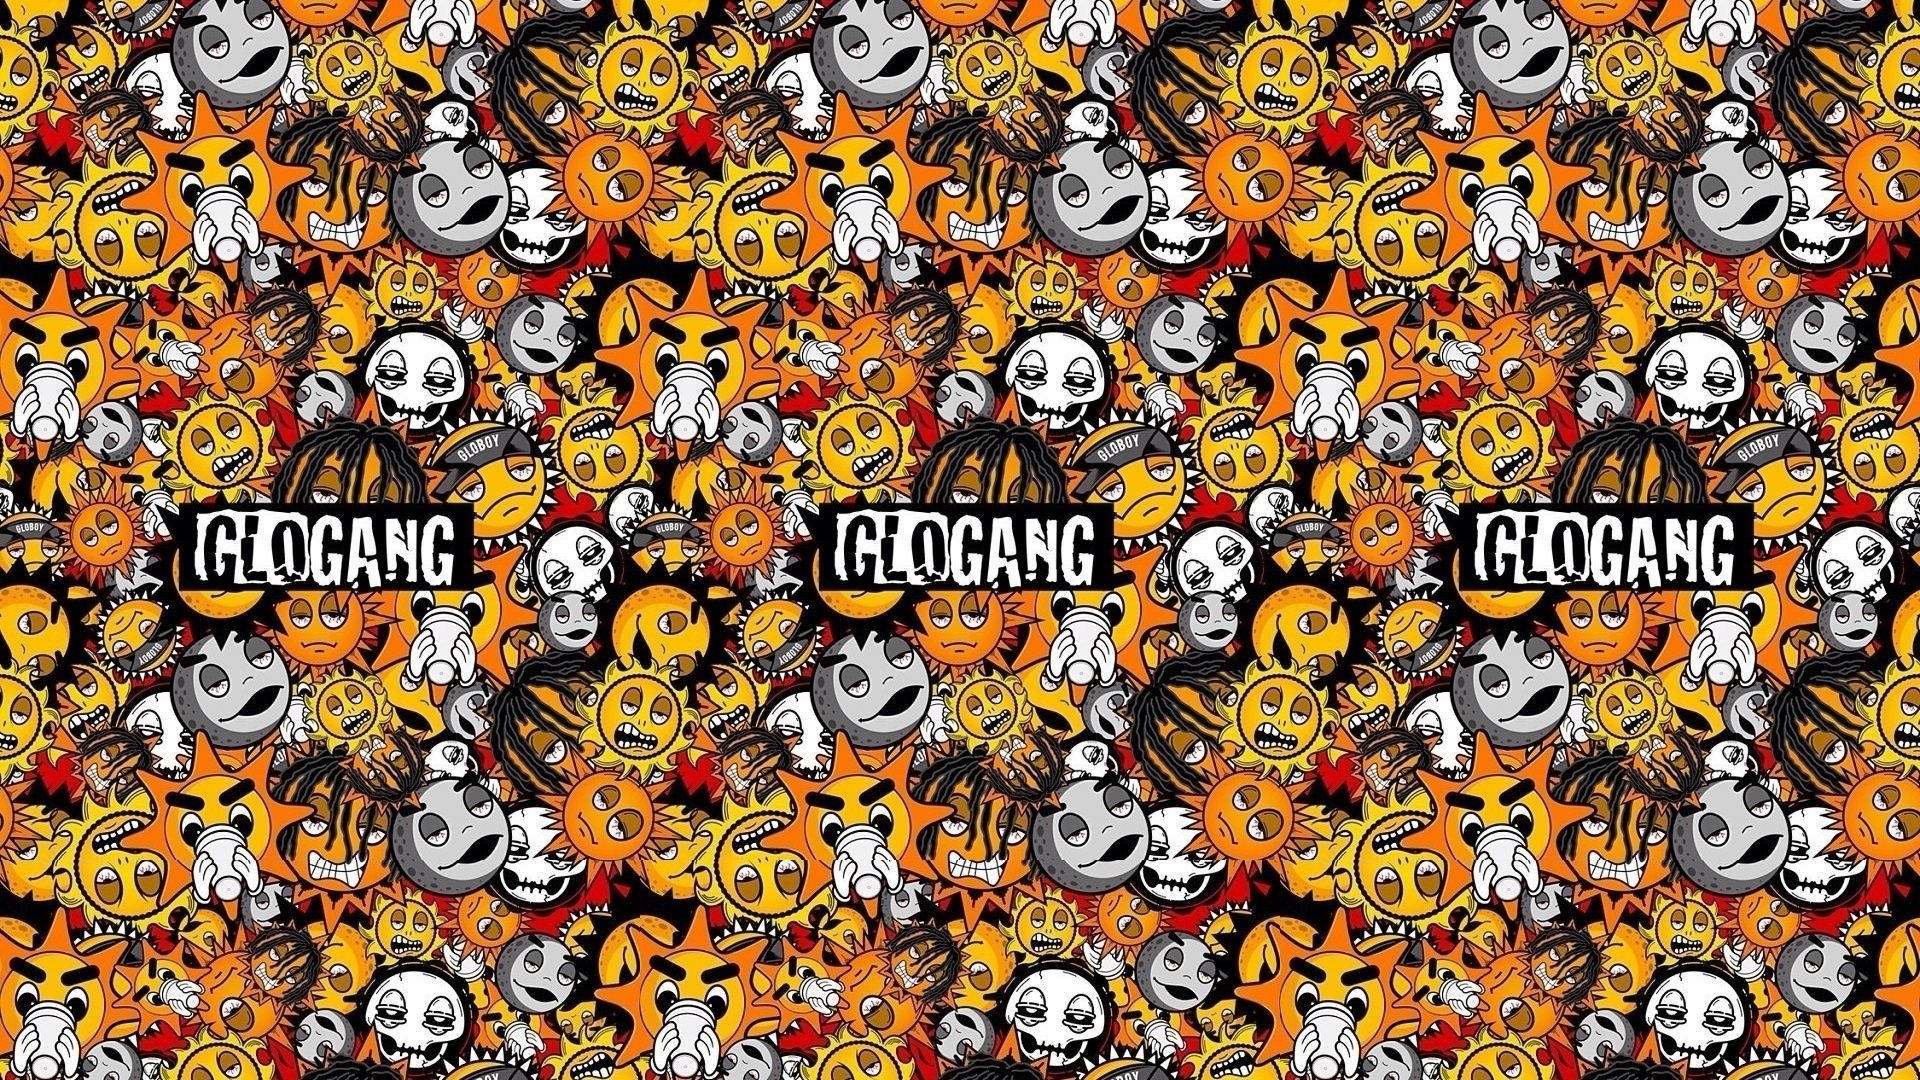 Glo Gang 3 - GeorgeNotFound Store